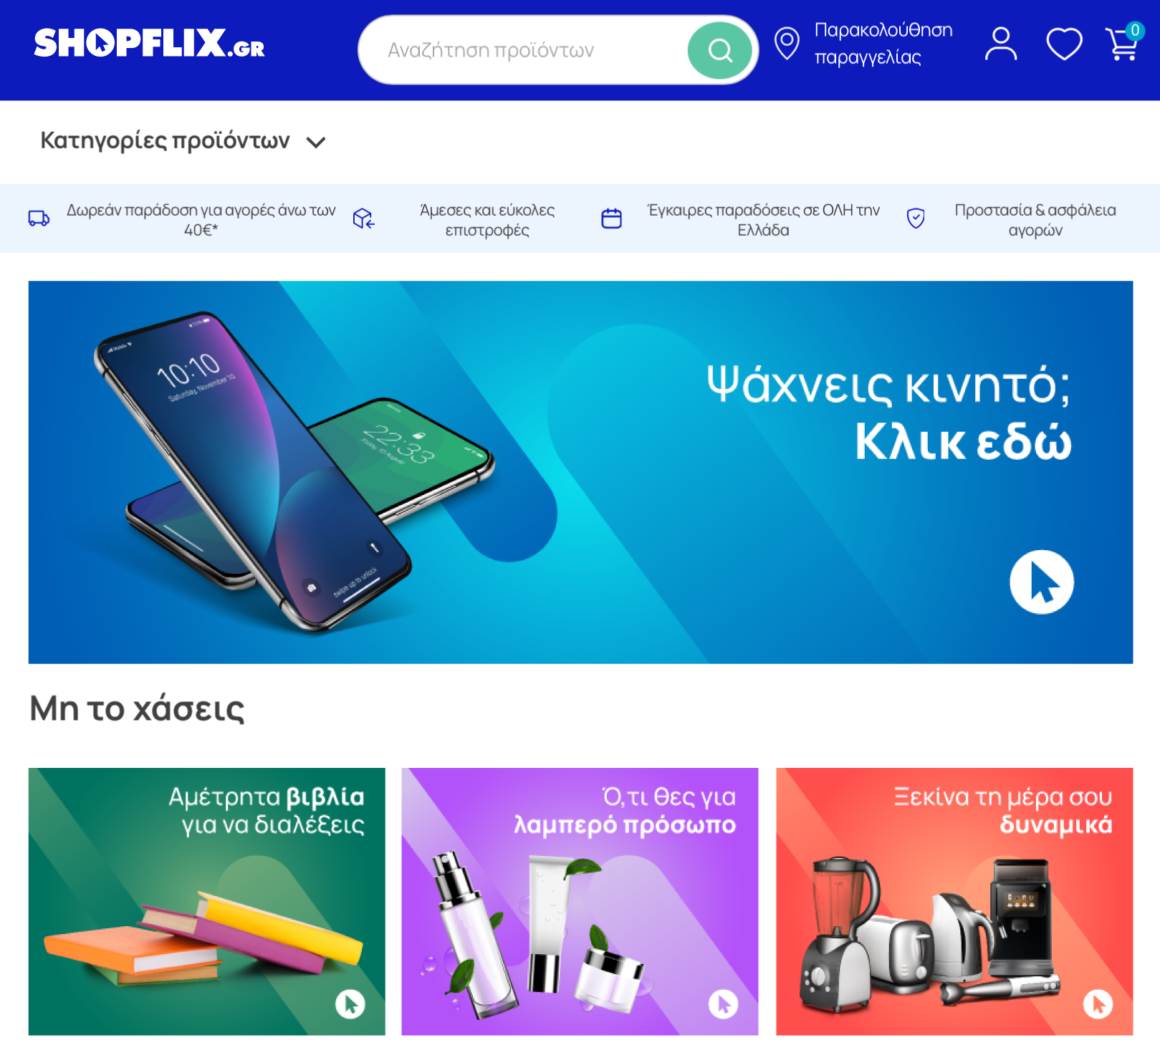 SHOPFLIX.gr: Το πιο πλήρες και σύγχρονο online marketplace της Ελλάδας είναι εδώ!